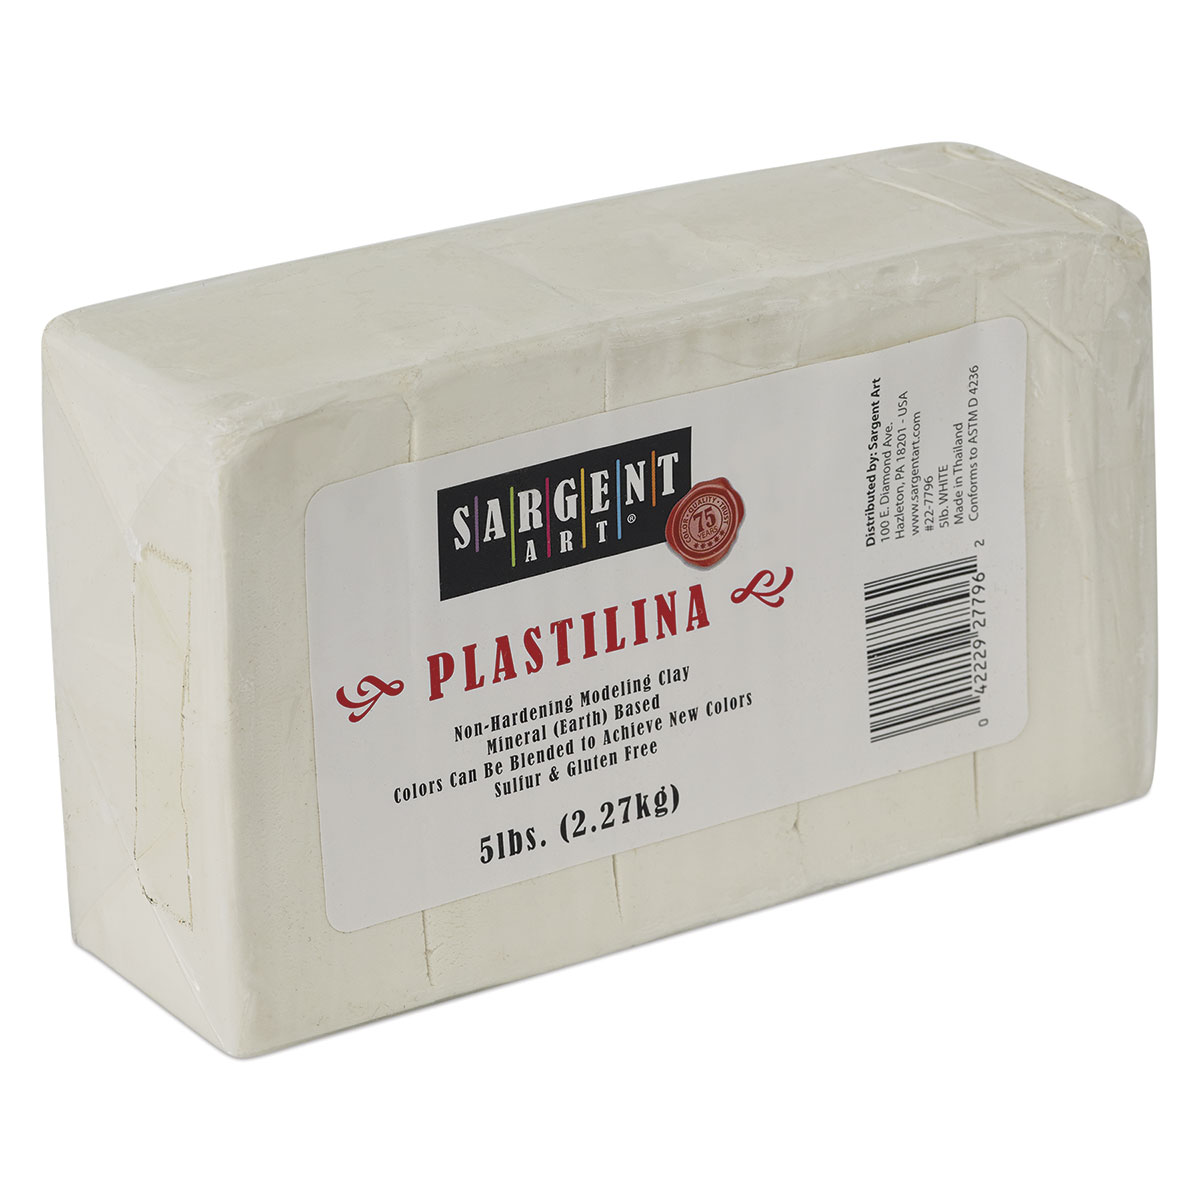 Sargent Art Plastilina Modeling Clay 5-Pound White 